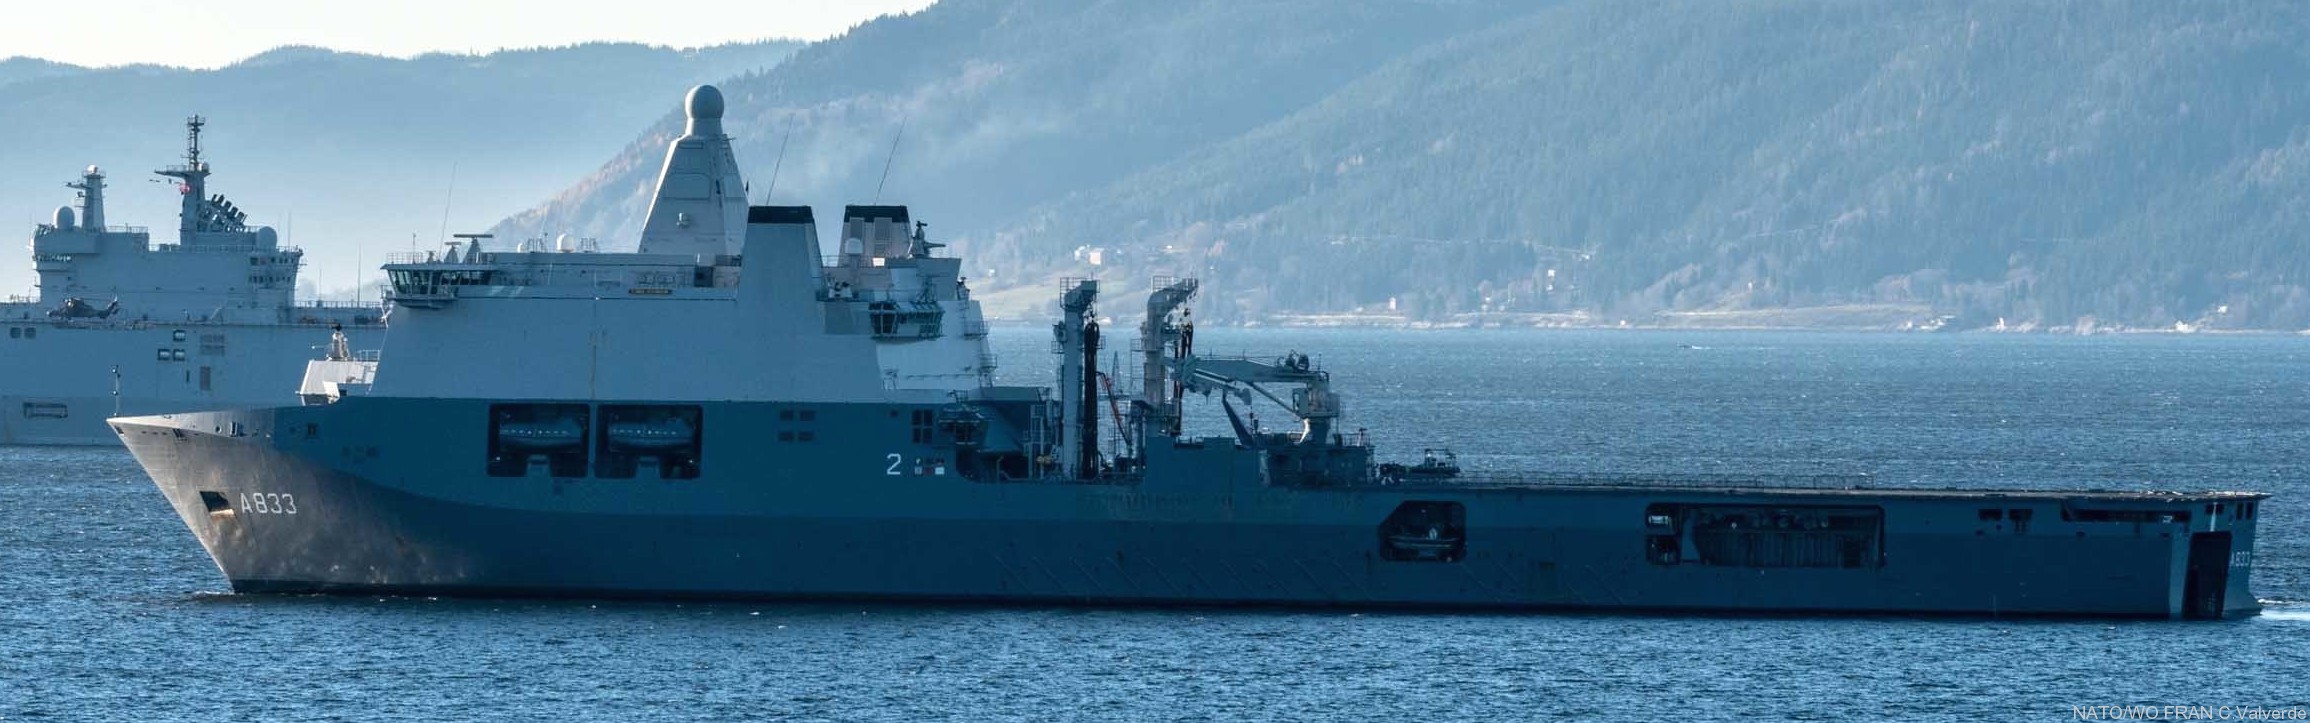 a-833 hnlms karel doorman joint support ship royal netherlands navy koninklijke marine 38 nato germany